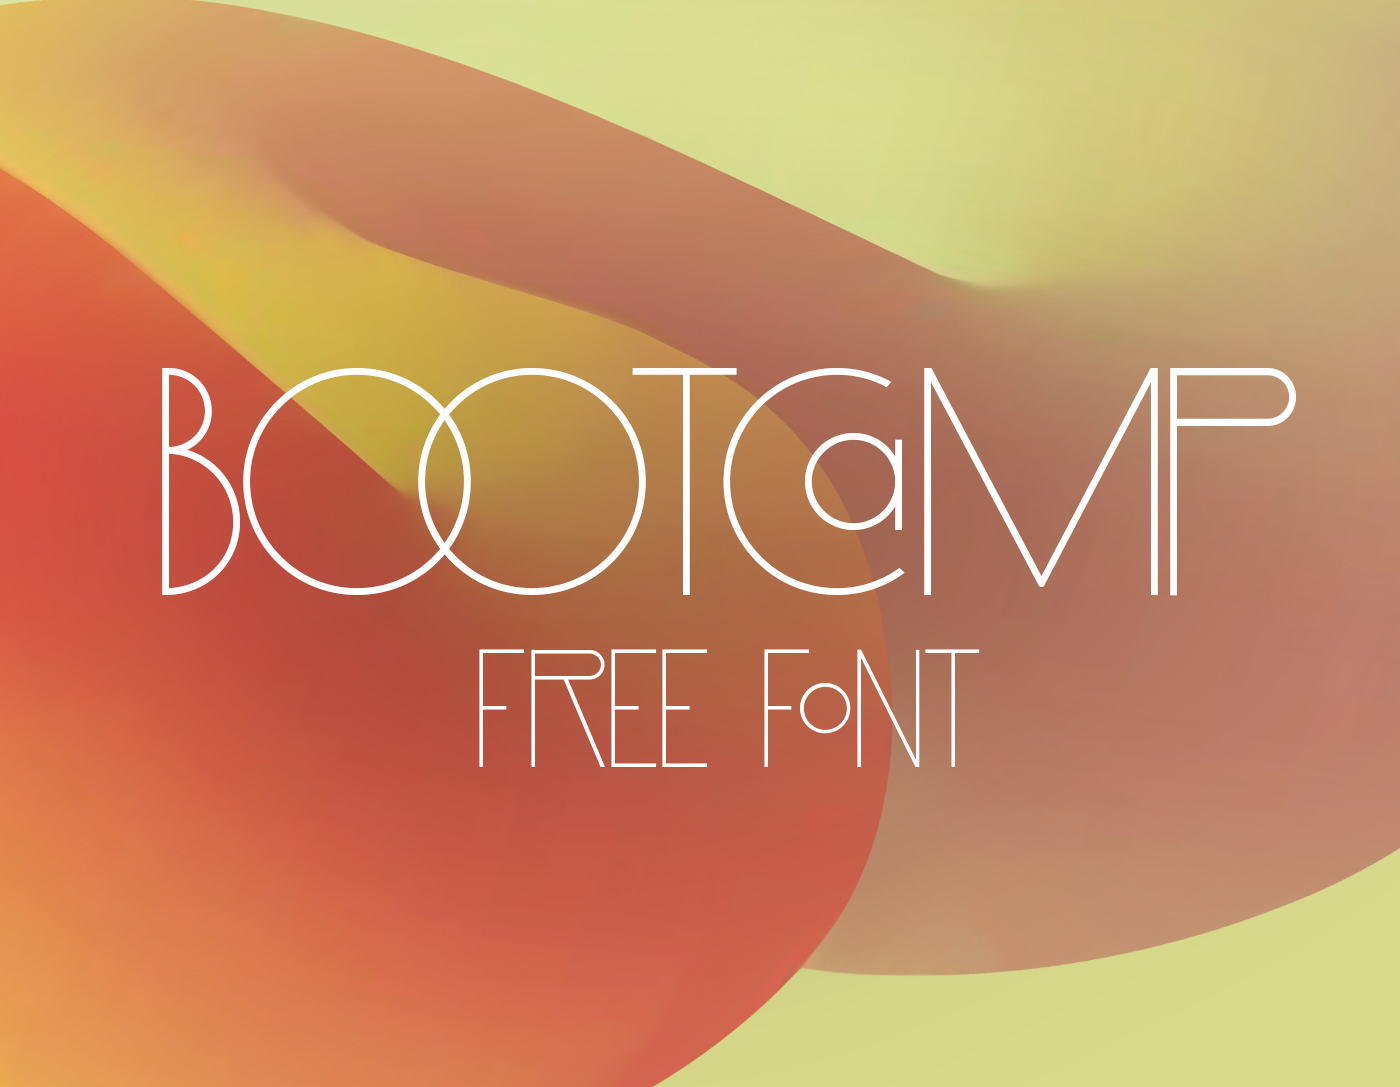 Bootcamp font